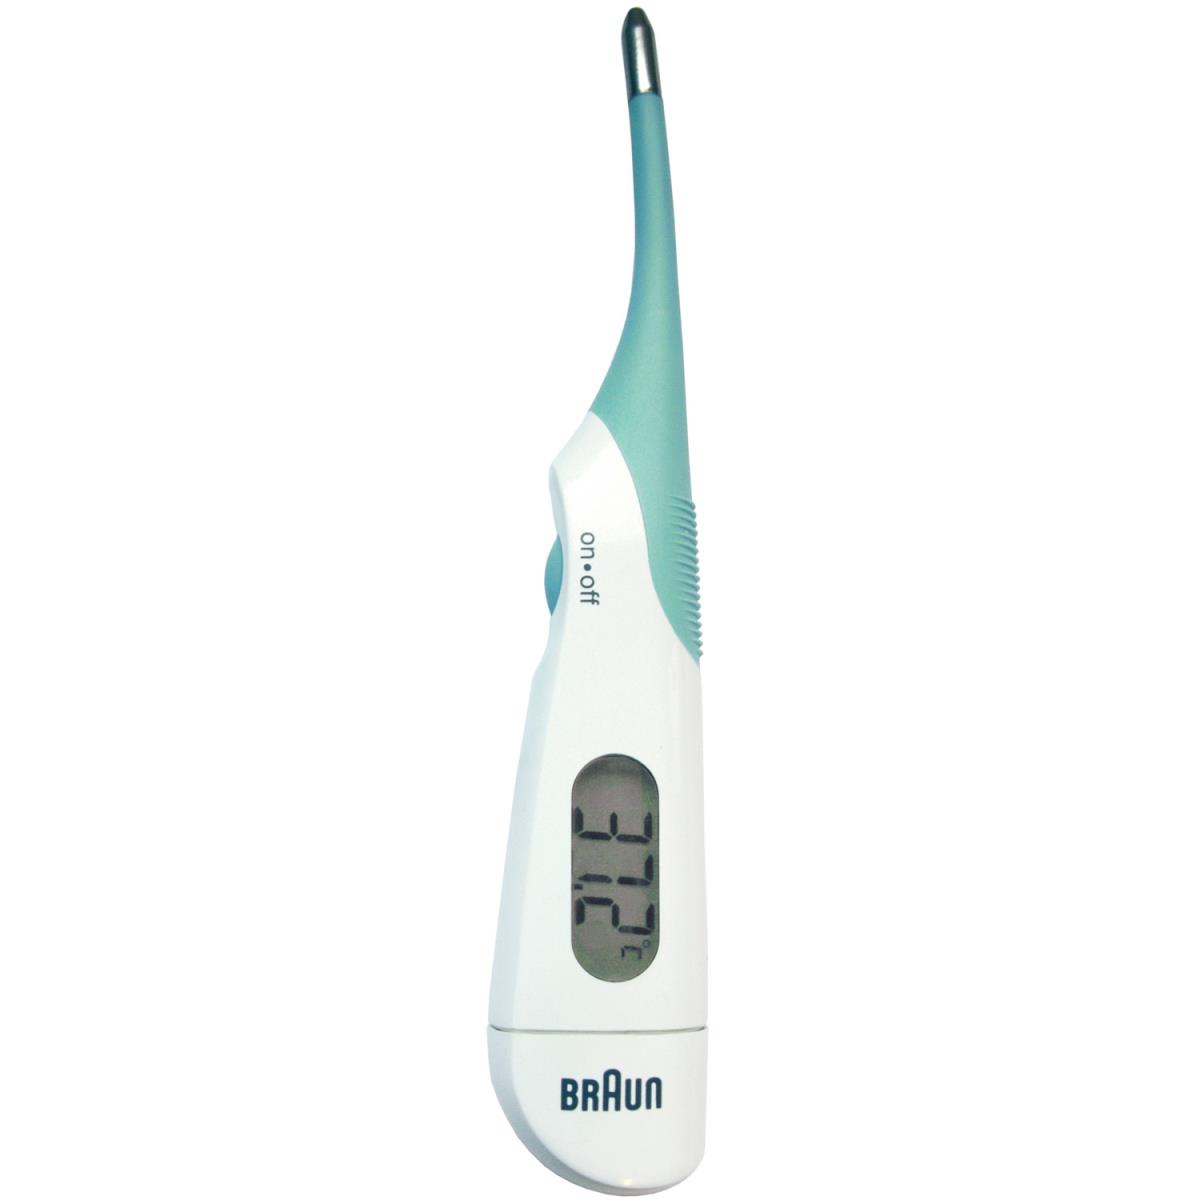 Braun: Digital termometer PRT 1000